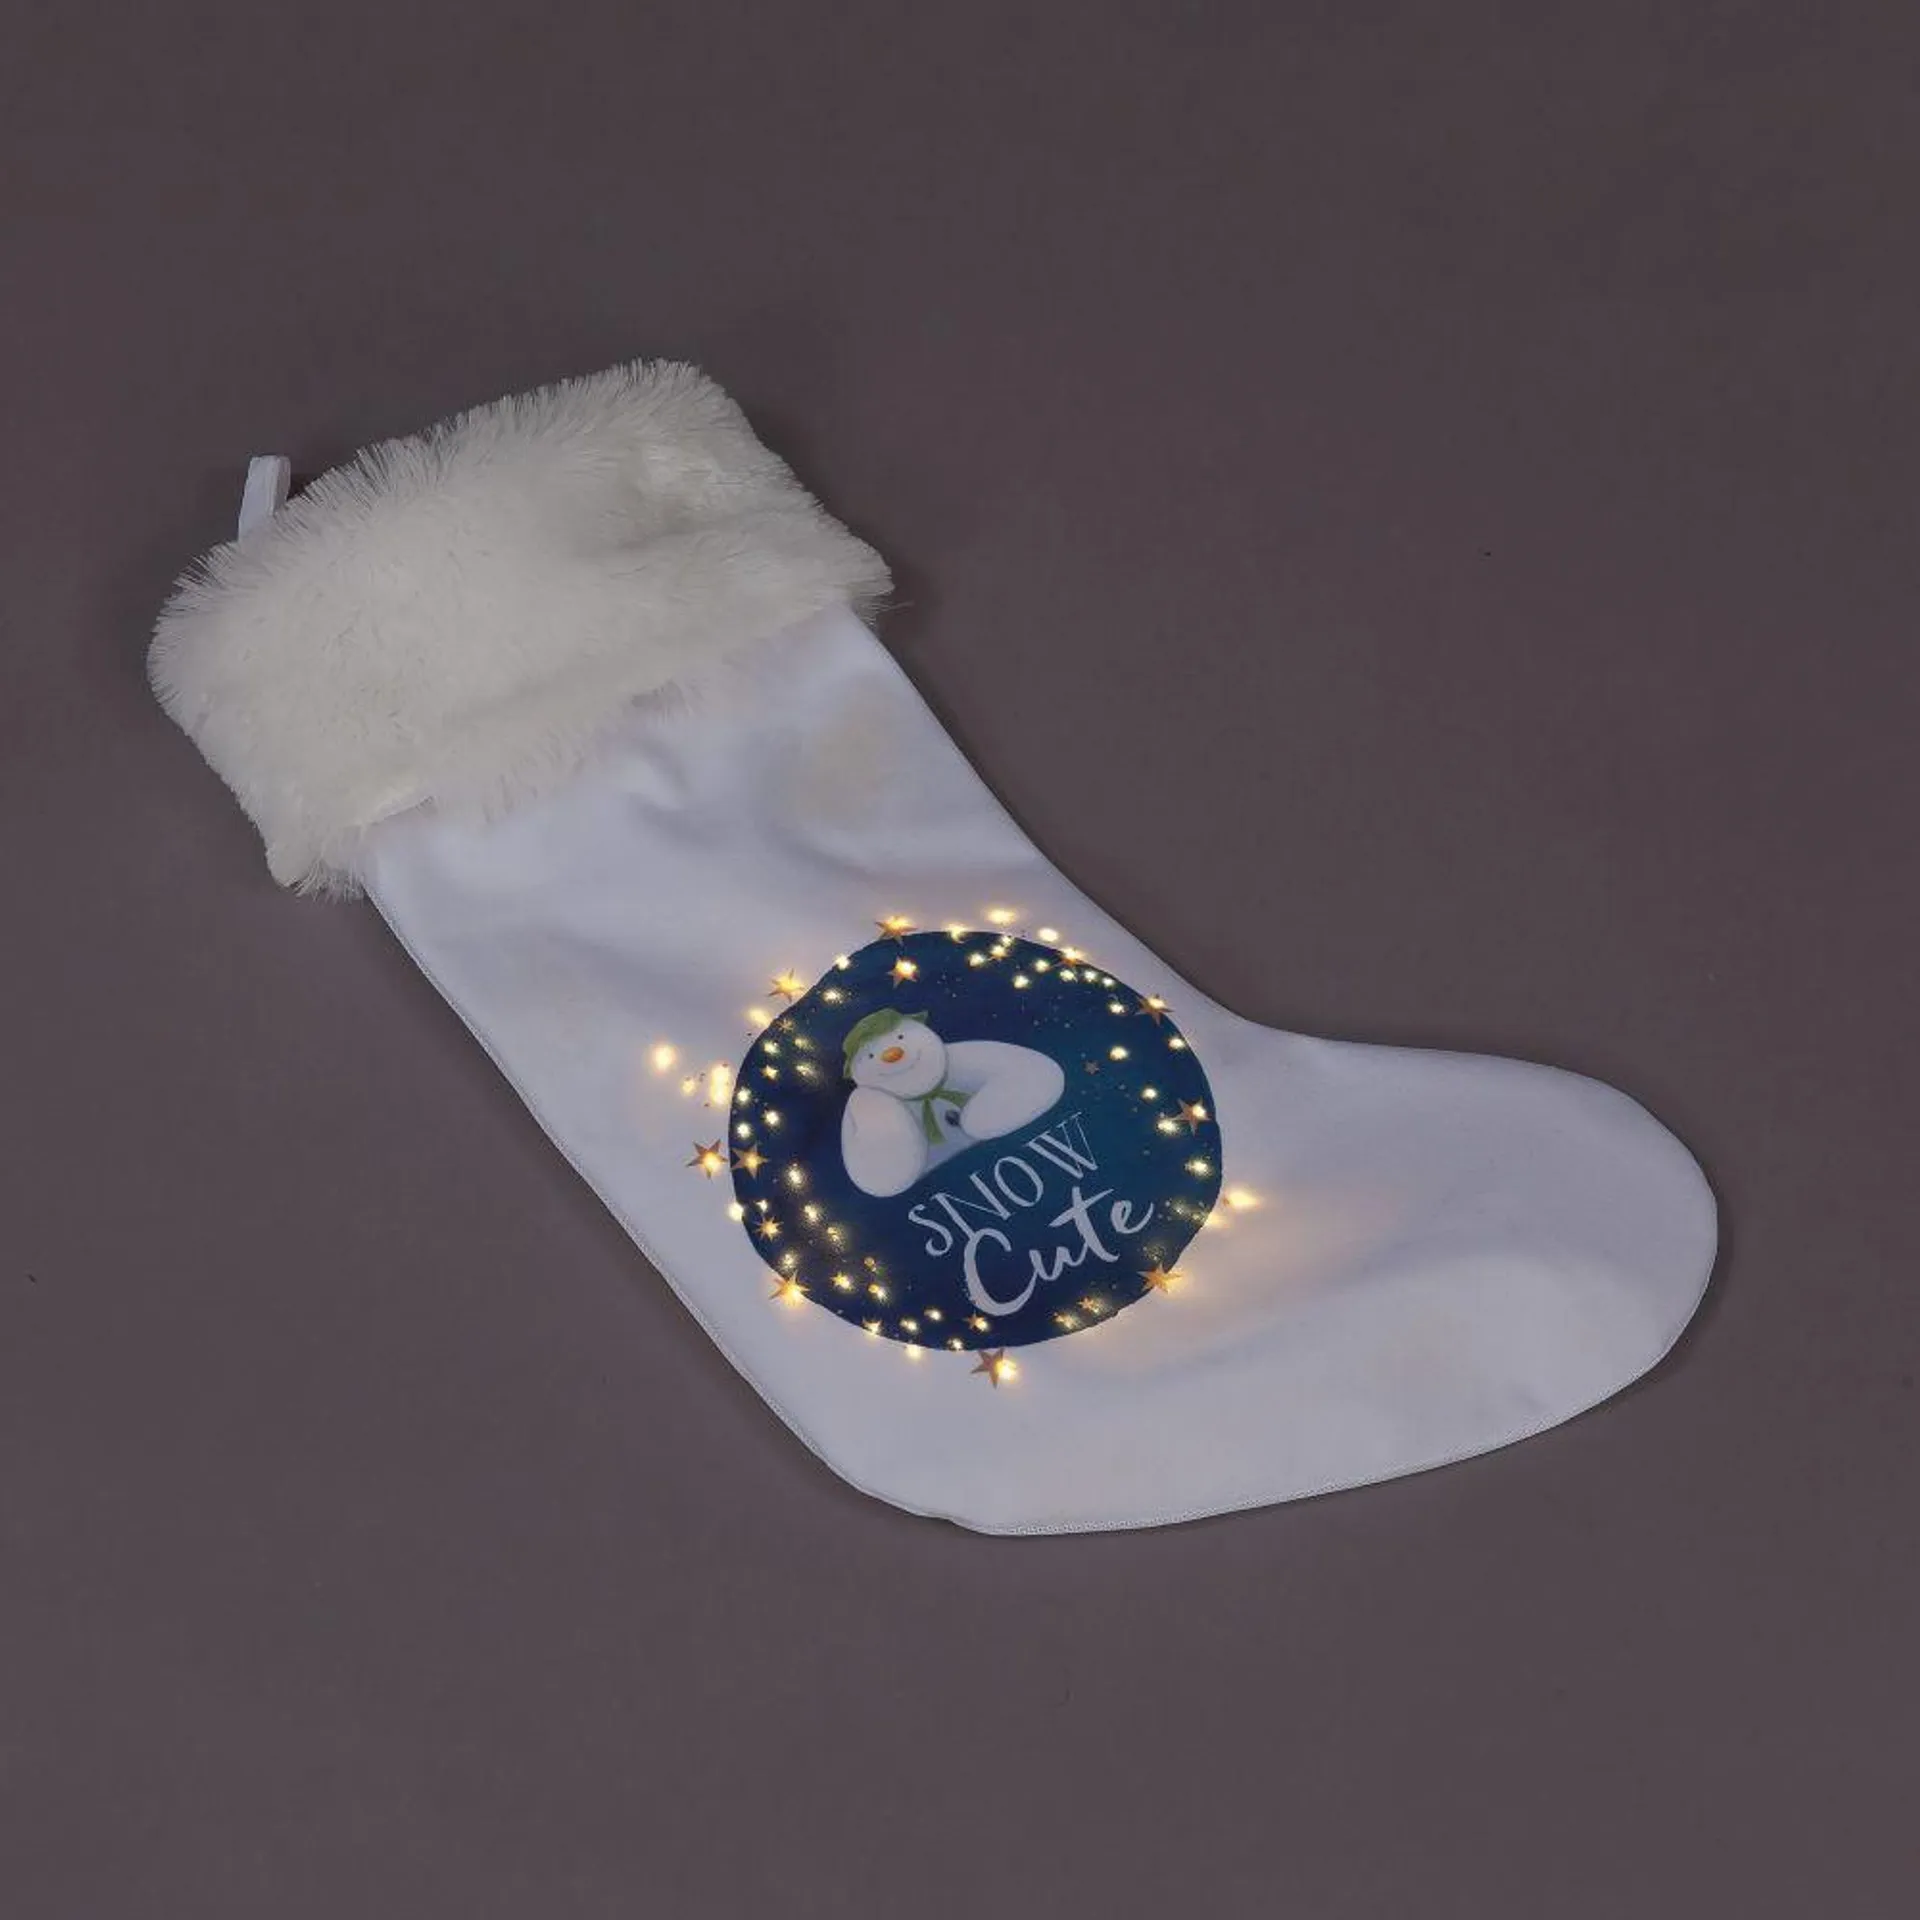 Fiber Optic Snowman 'Snow Cute' 50cm Stocking